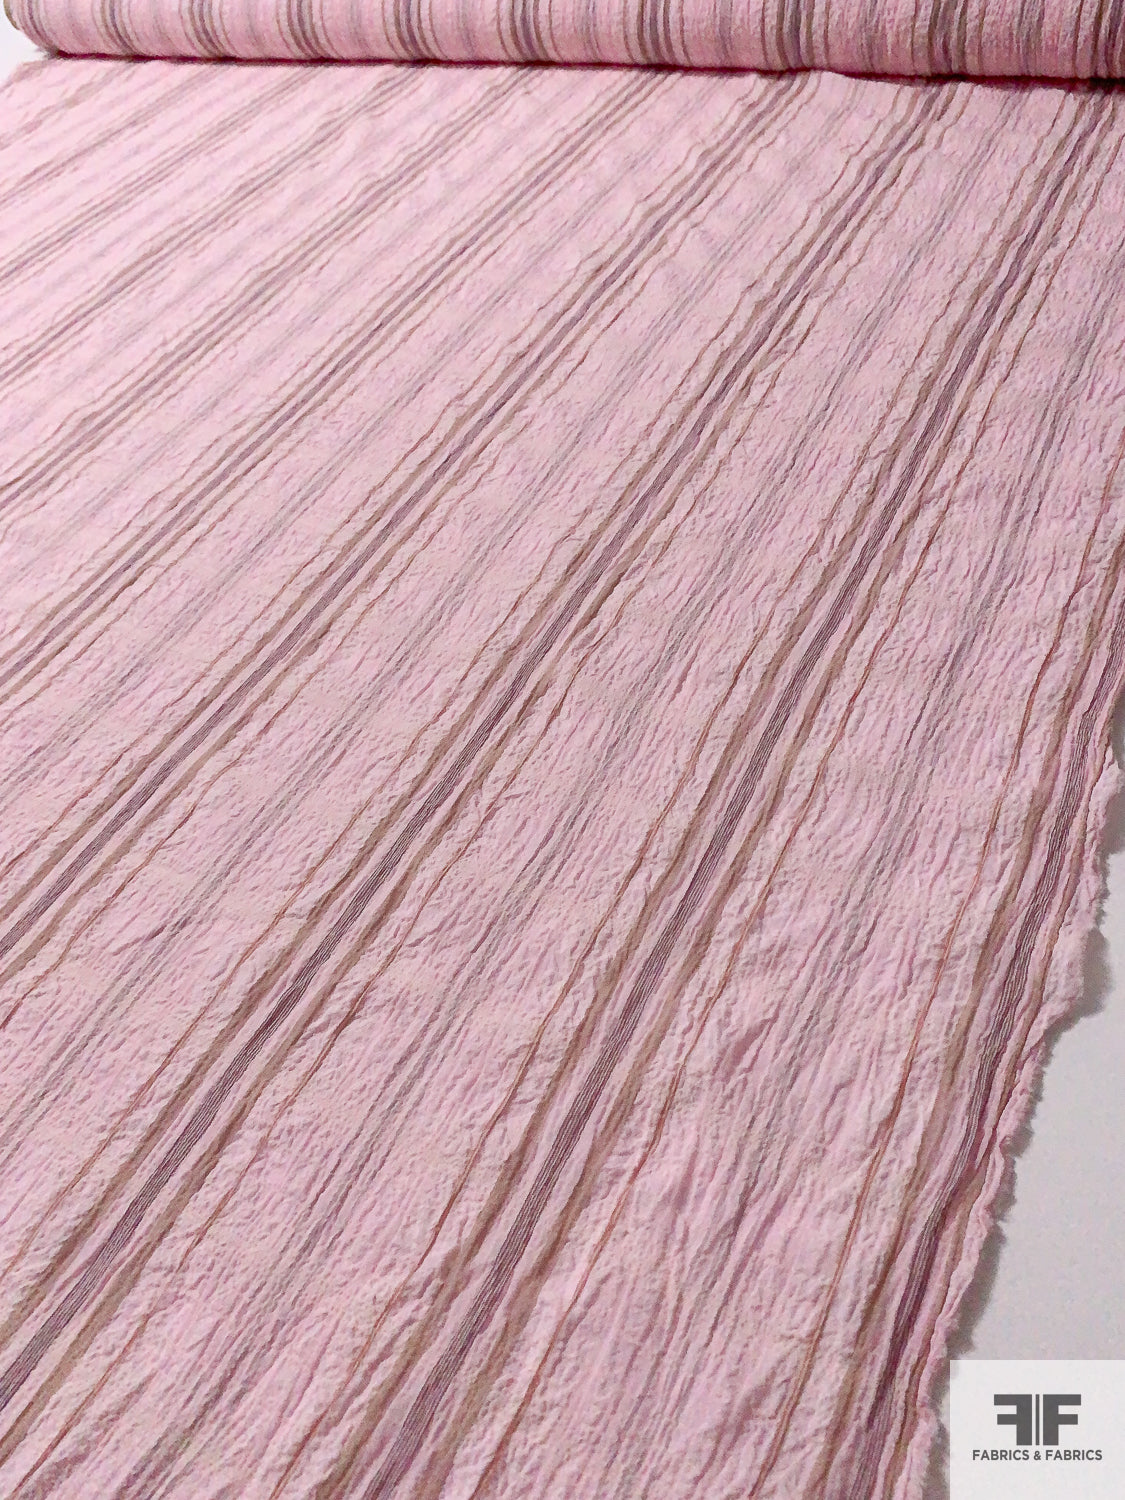 Vertical Striped Textured Cotton Gauze - Pink / Purple / Tan / Burnt Orange